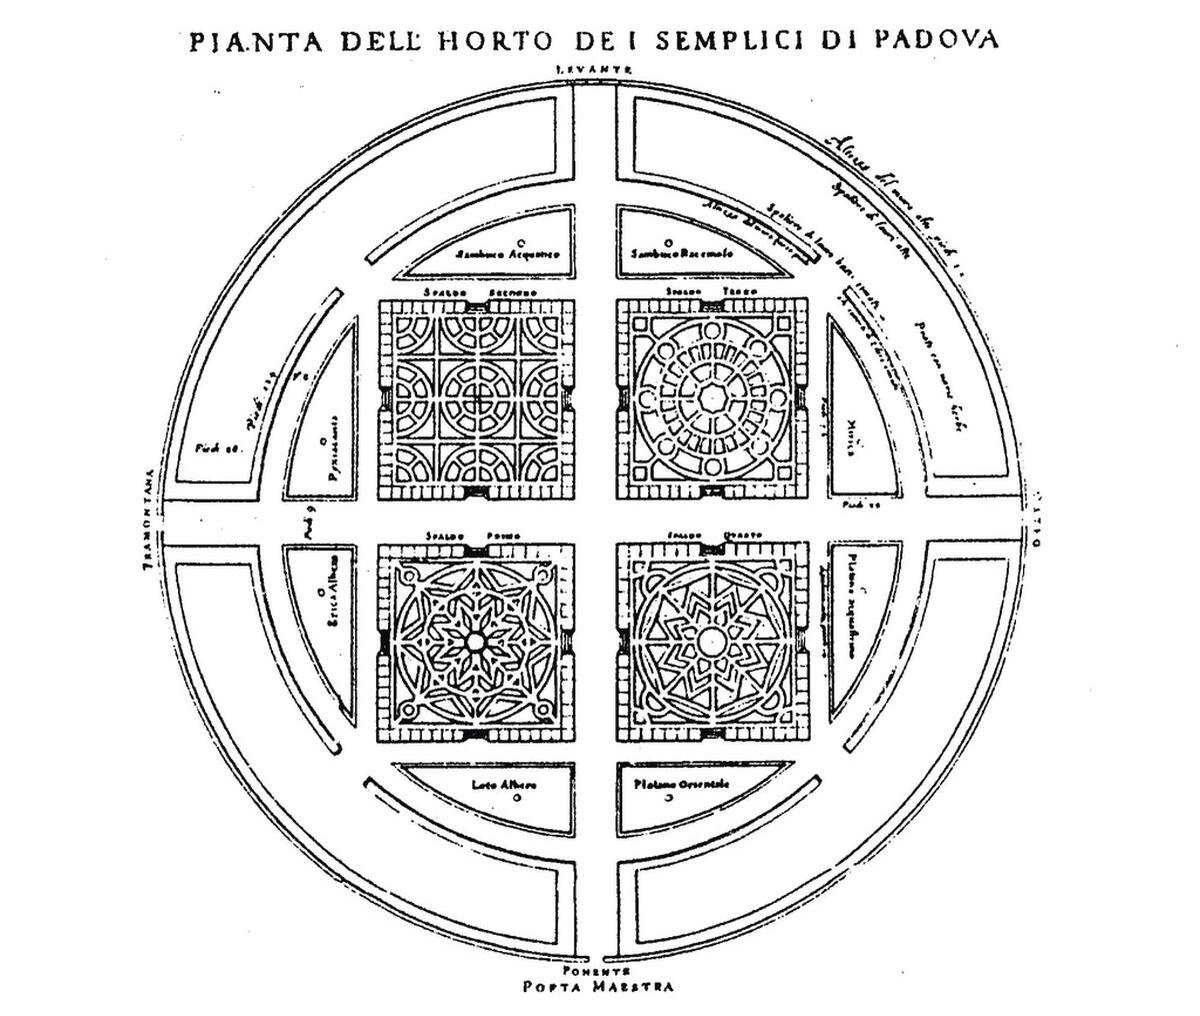 Girolamo Porro, Grundriss des botanischen Gartens in Padua, aus: L'Horto dei semplici di Padova, Venedig 1591